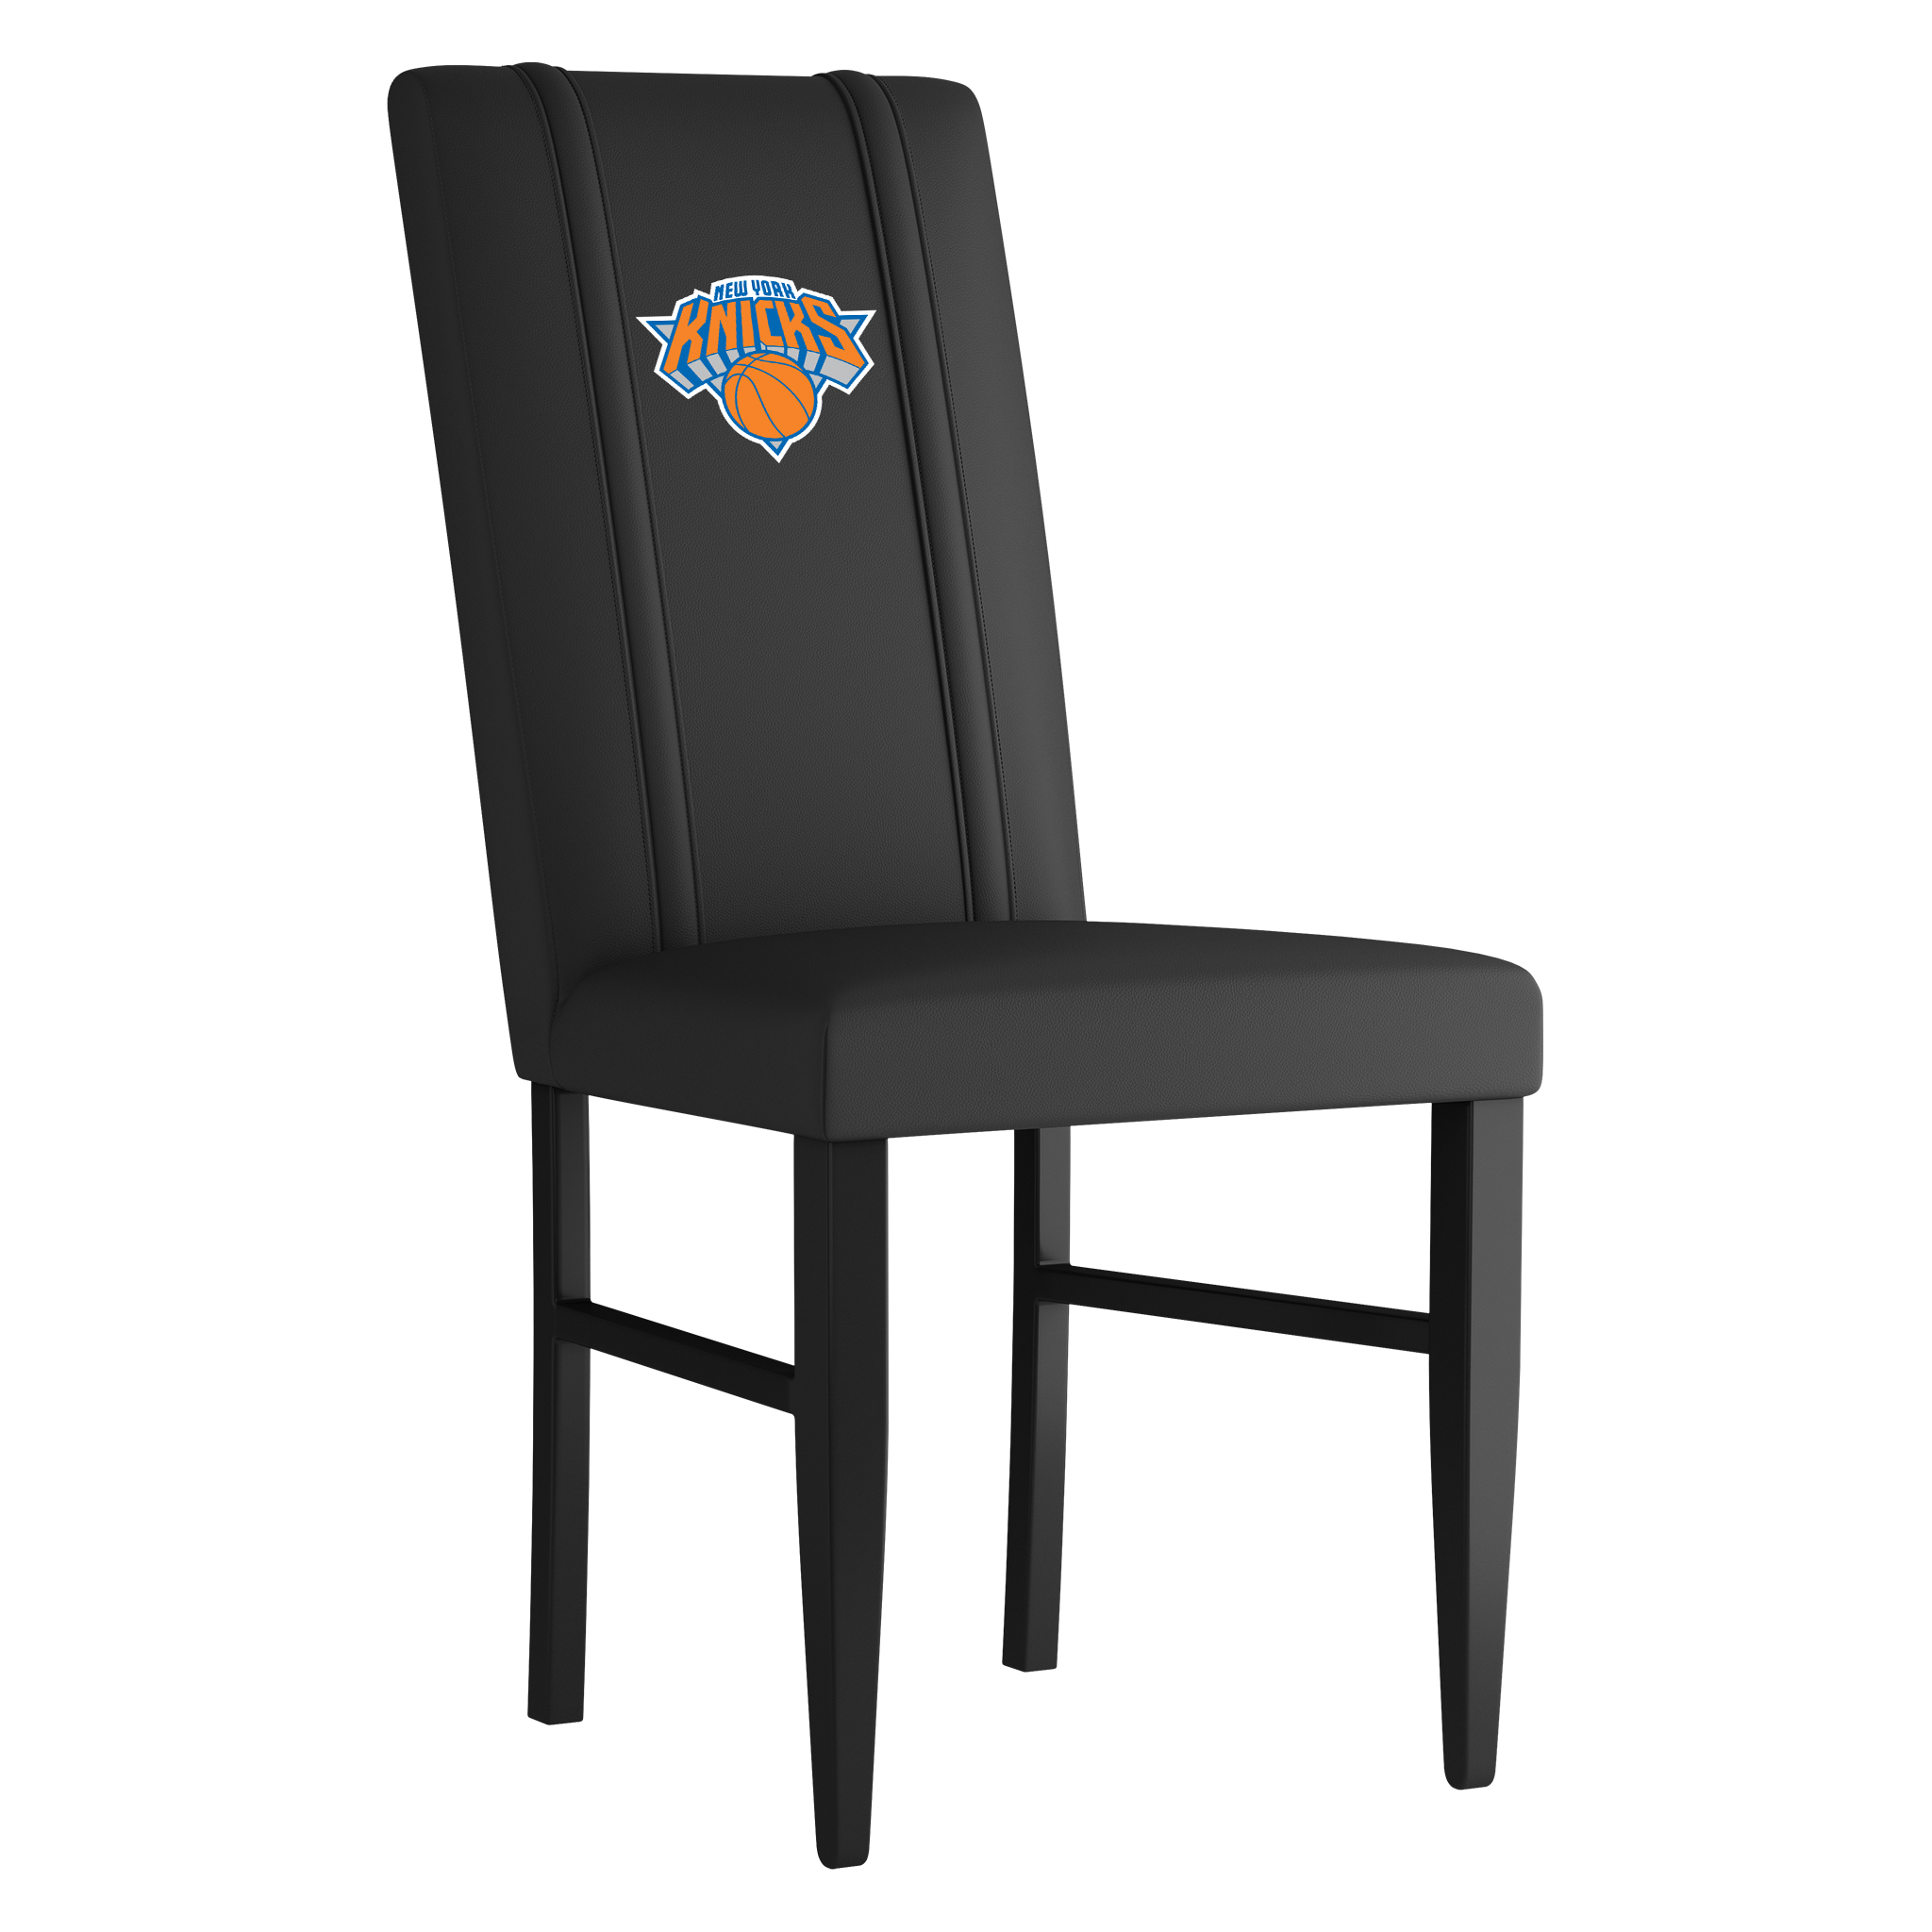 New York Knicks Side Chair 2000 With New York Knicks Logo